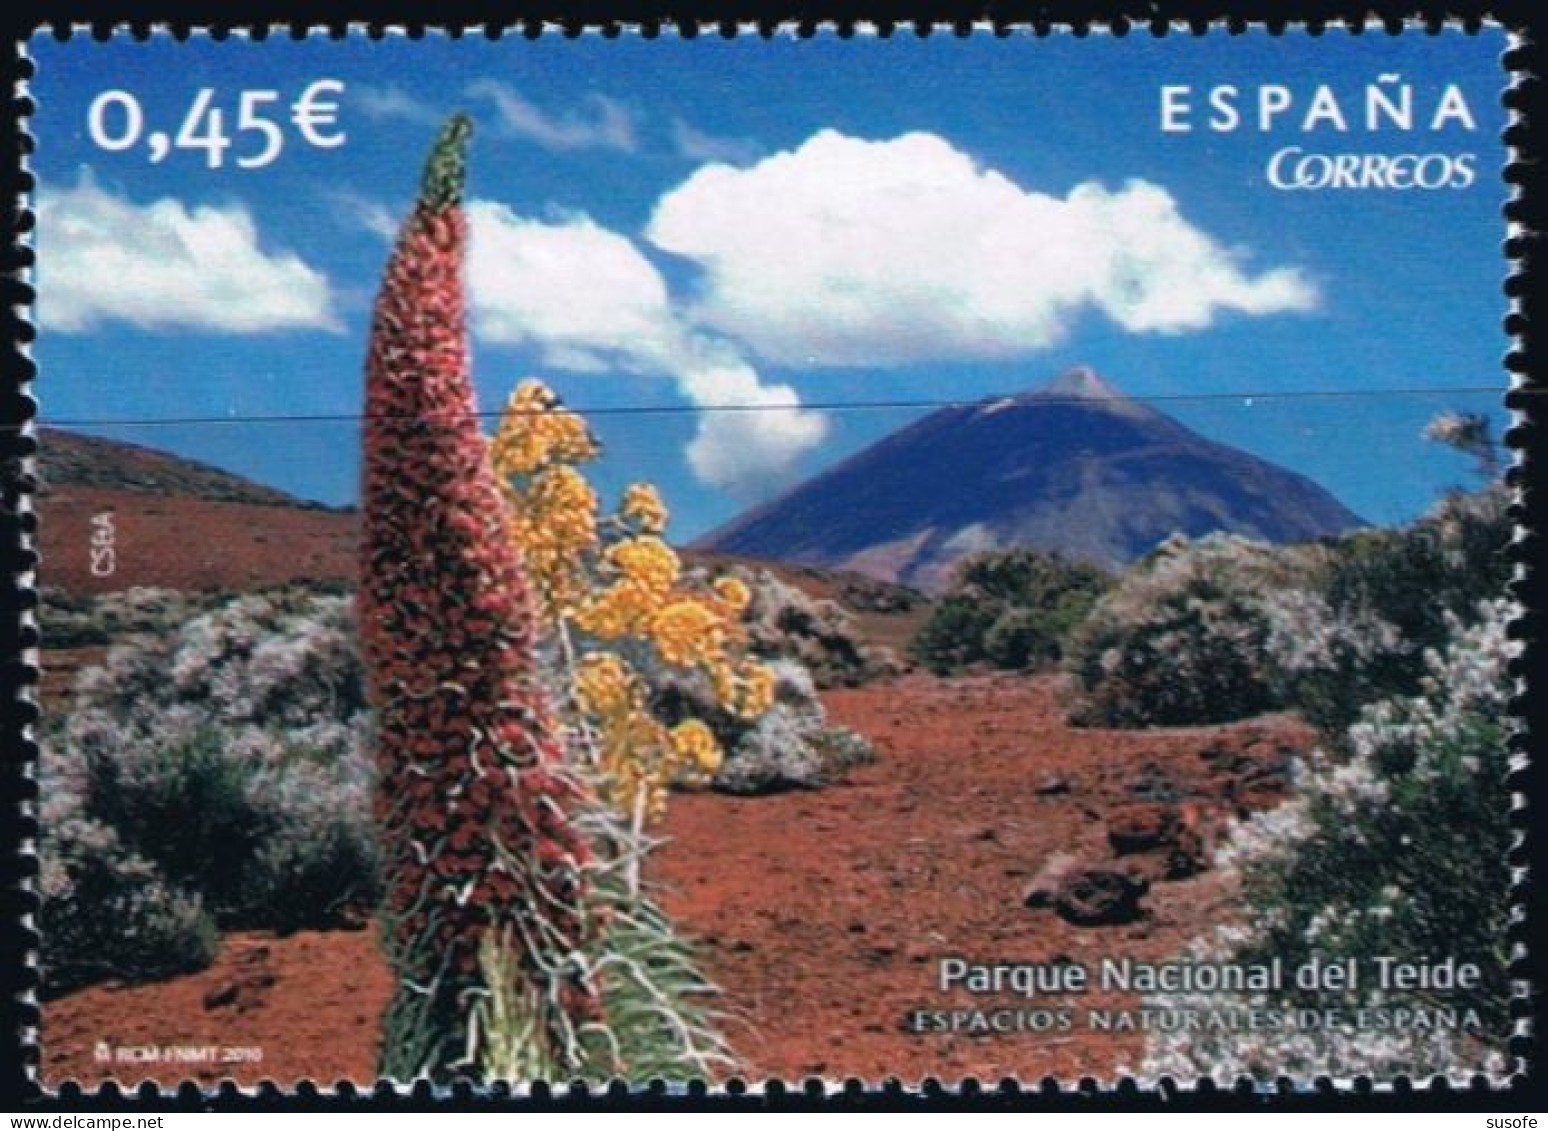 España 2010 Edifil 4590 Sello ** Espacios Naturales Parque Nacional Del Teide Tenerife Paisaje Patrimonio Mundial UNESCO - Nuevos